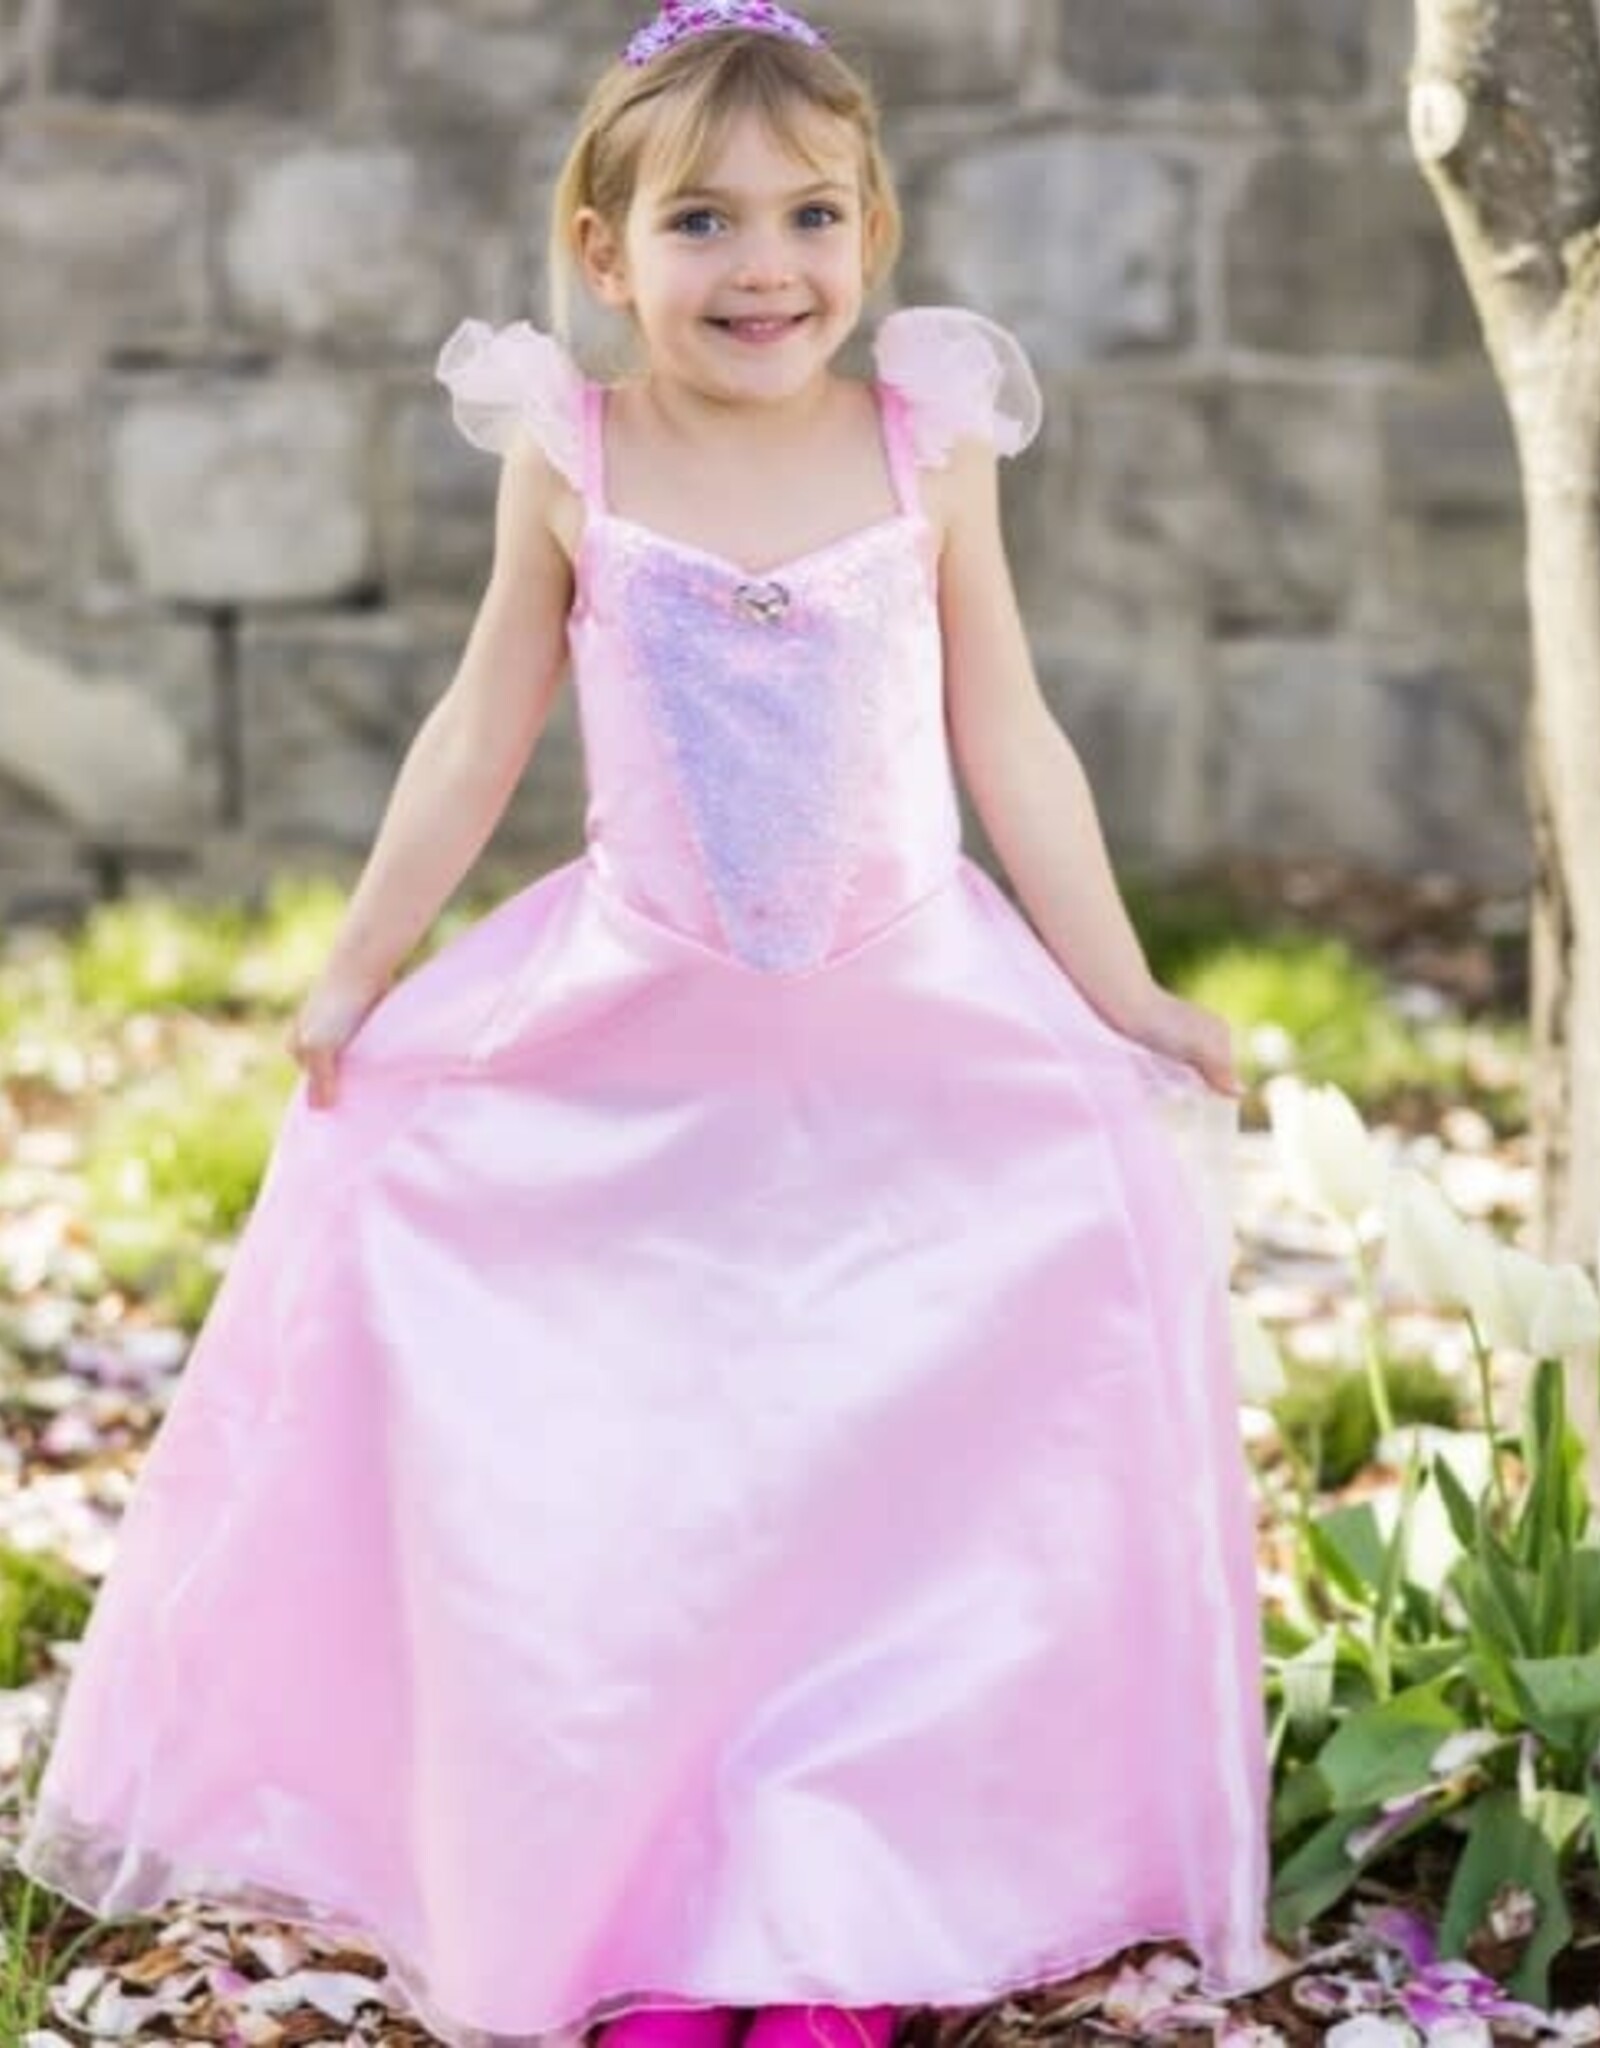 Great Pretenders Party Princess Dress, Light Pink, Size 3-4